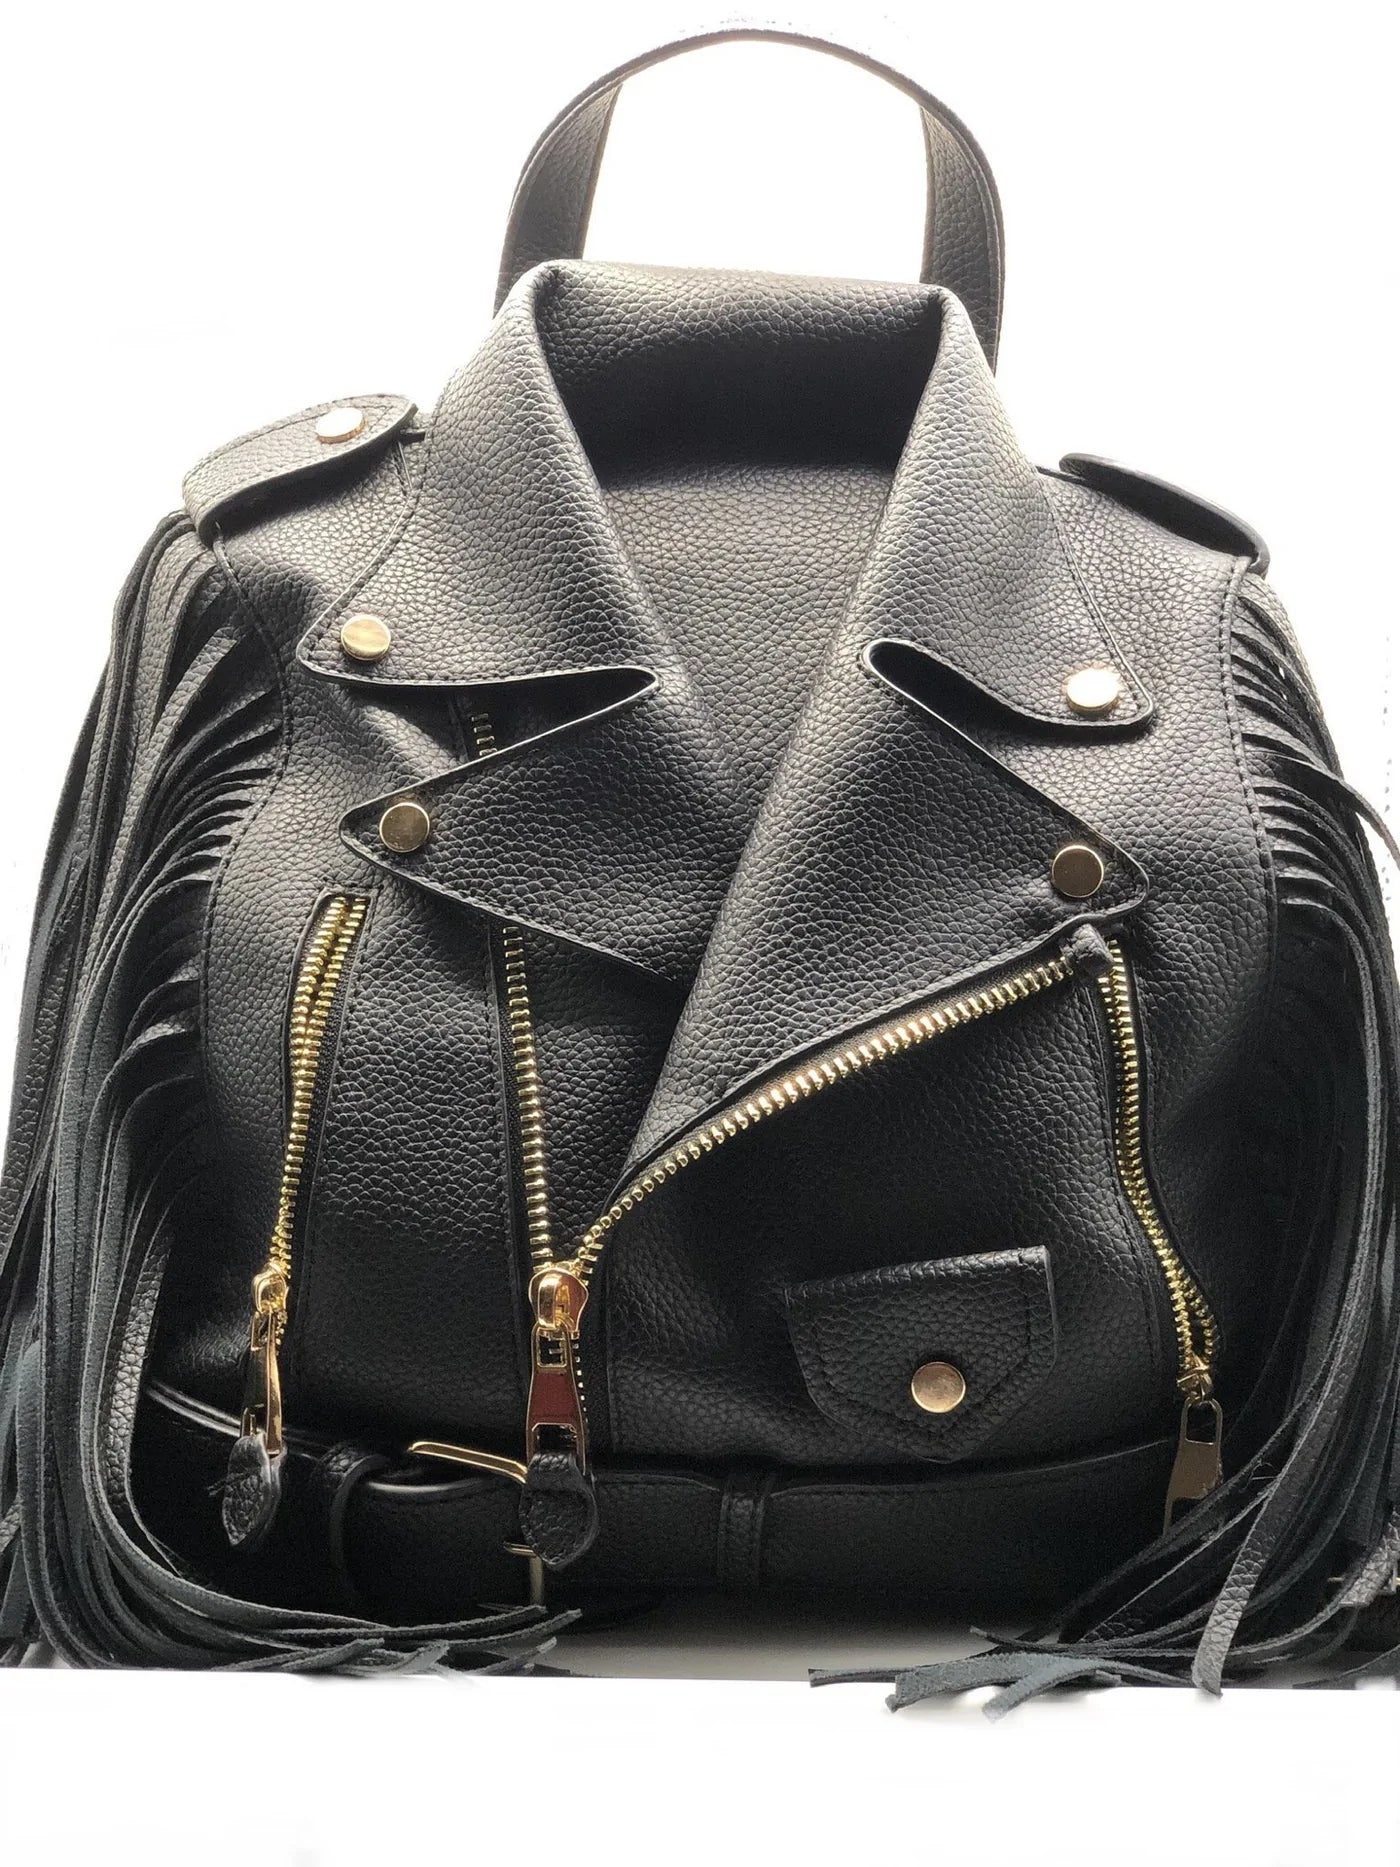 Bags | Black Motorcycle Jacket Vegan Leather Fanny Pack | Poshmark